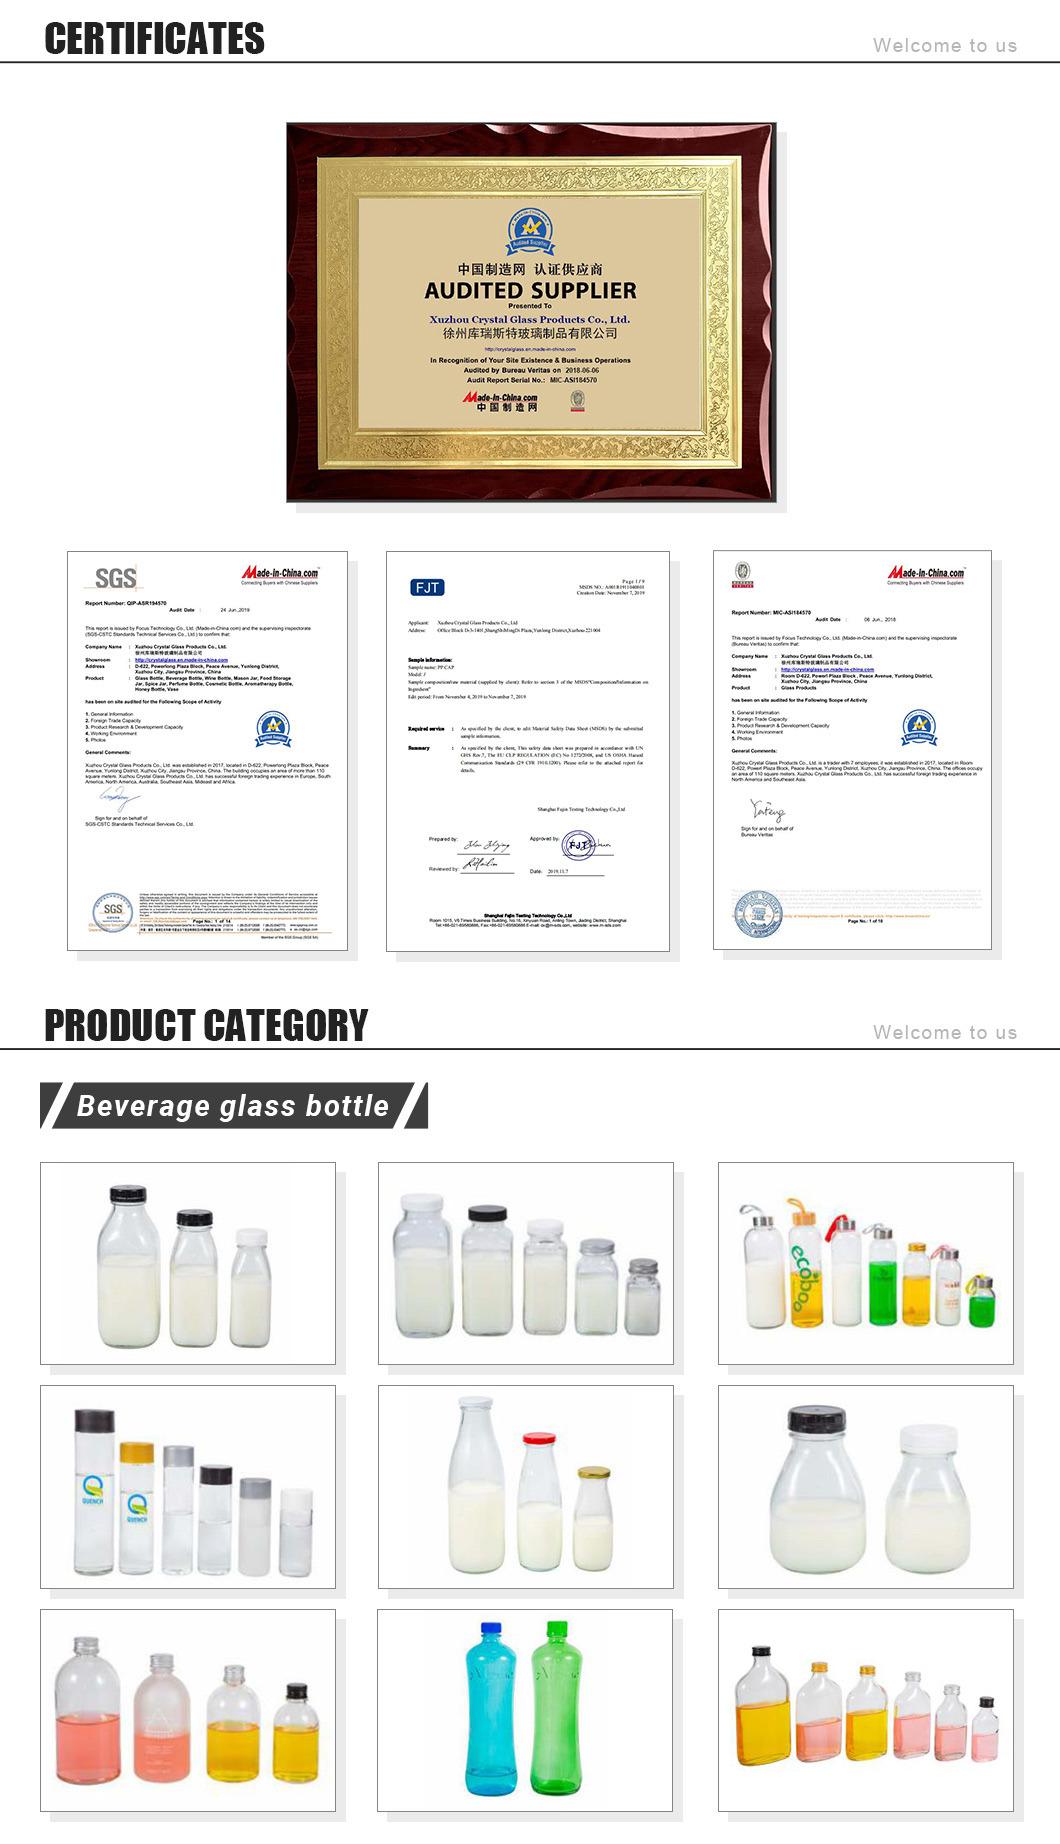 Customized Color 20ml 30ml 40ml 50ml 60ml 100ml 120ml Essential Oil Frost Dropper Glass Serum Bottles